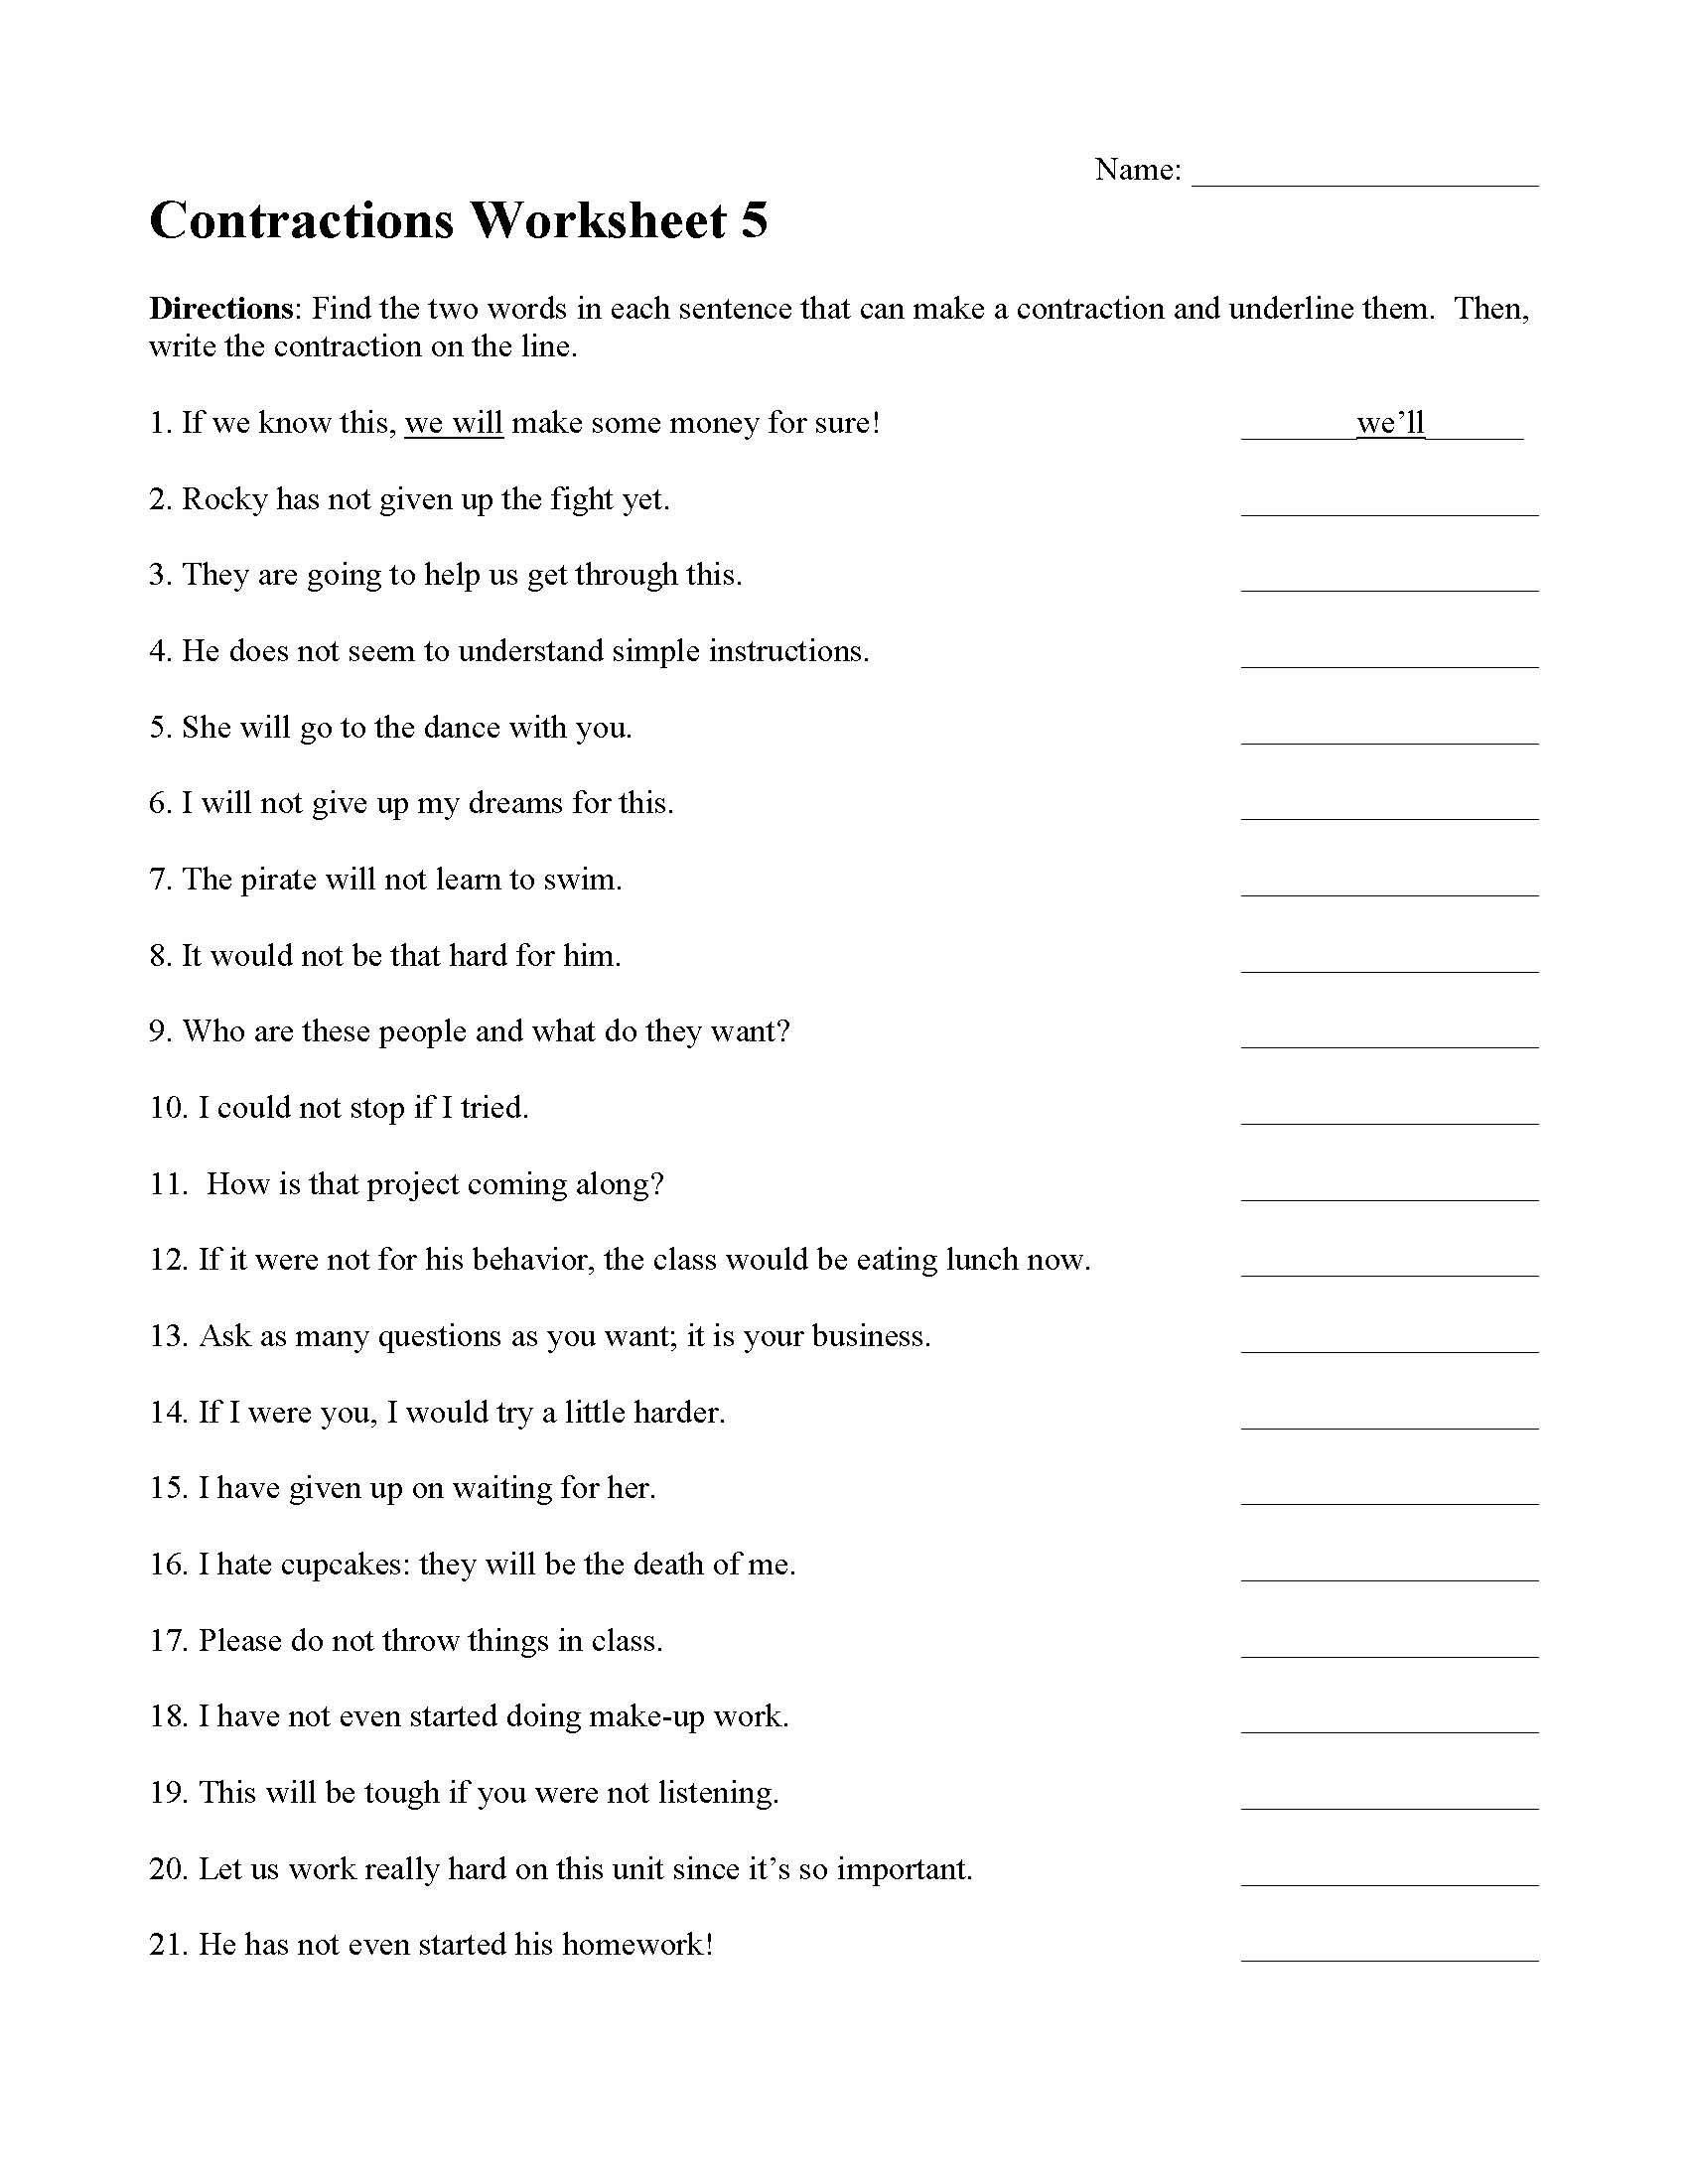 Contractions Worksheet 11rd Grade Word Worksheet